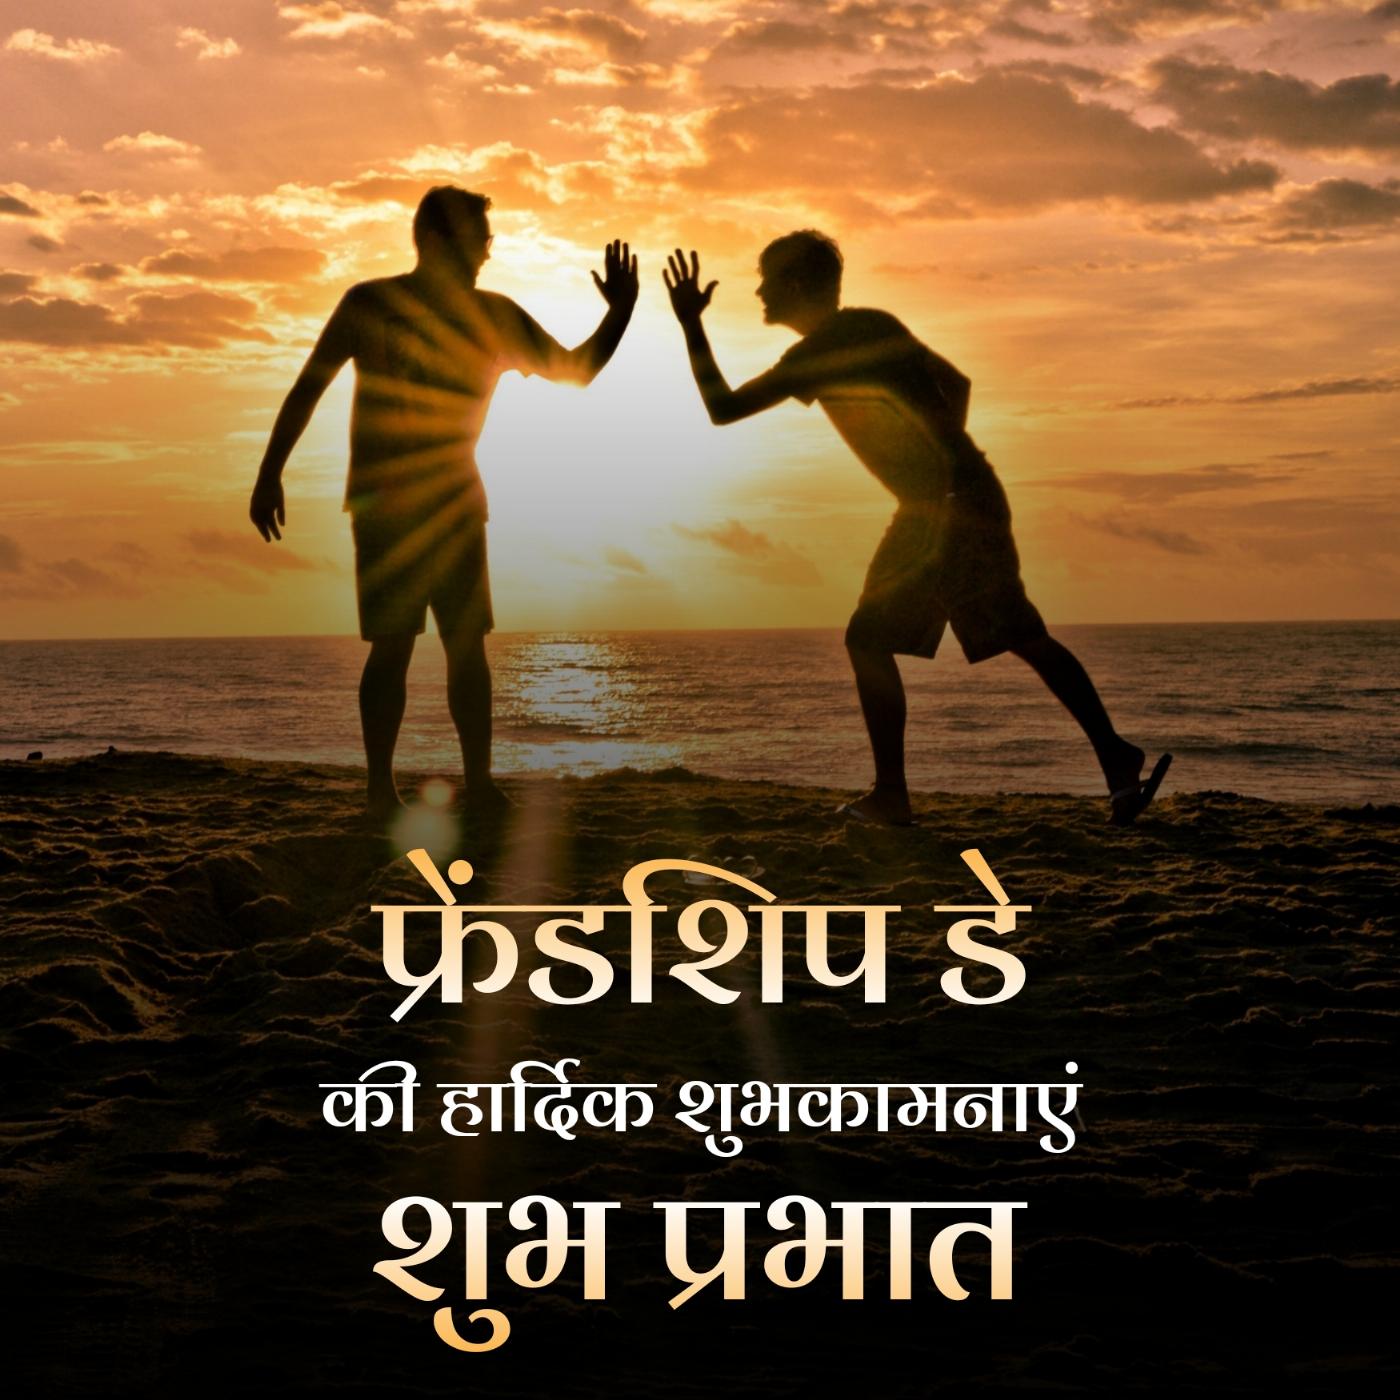 Shubh Prabhat Friendship Day Ki Hardik Shubhkamnaye Images